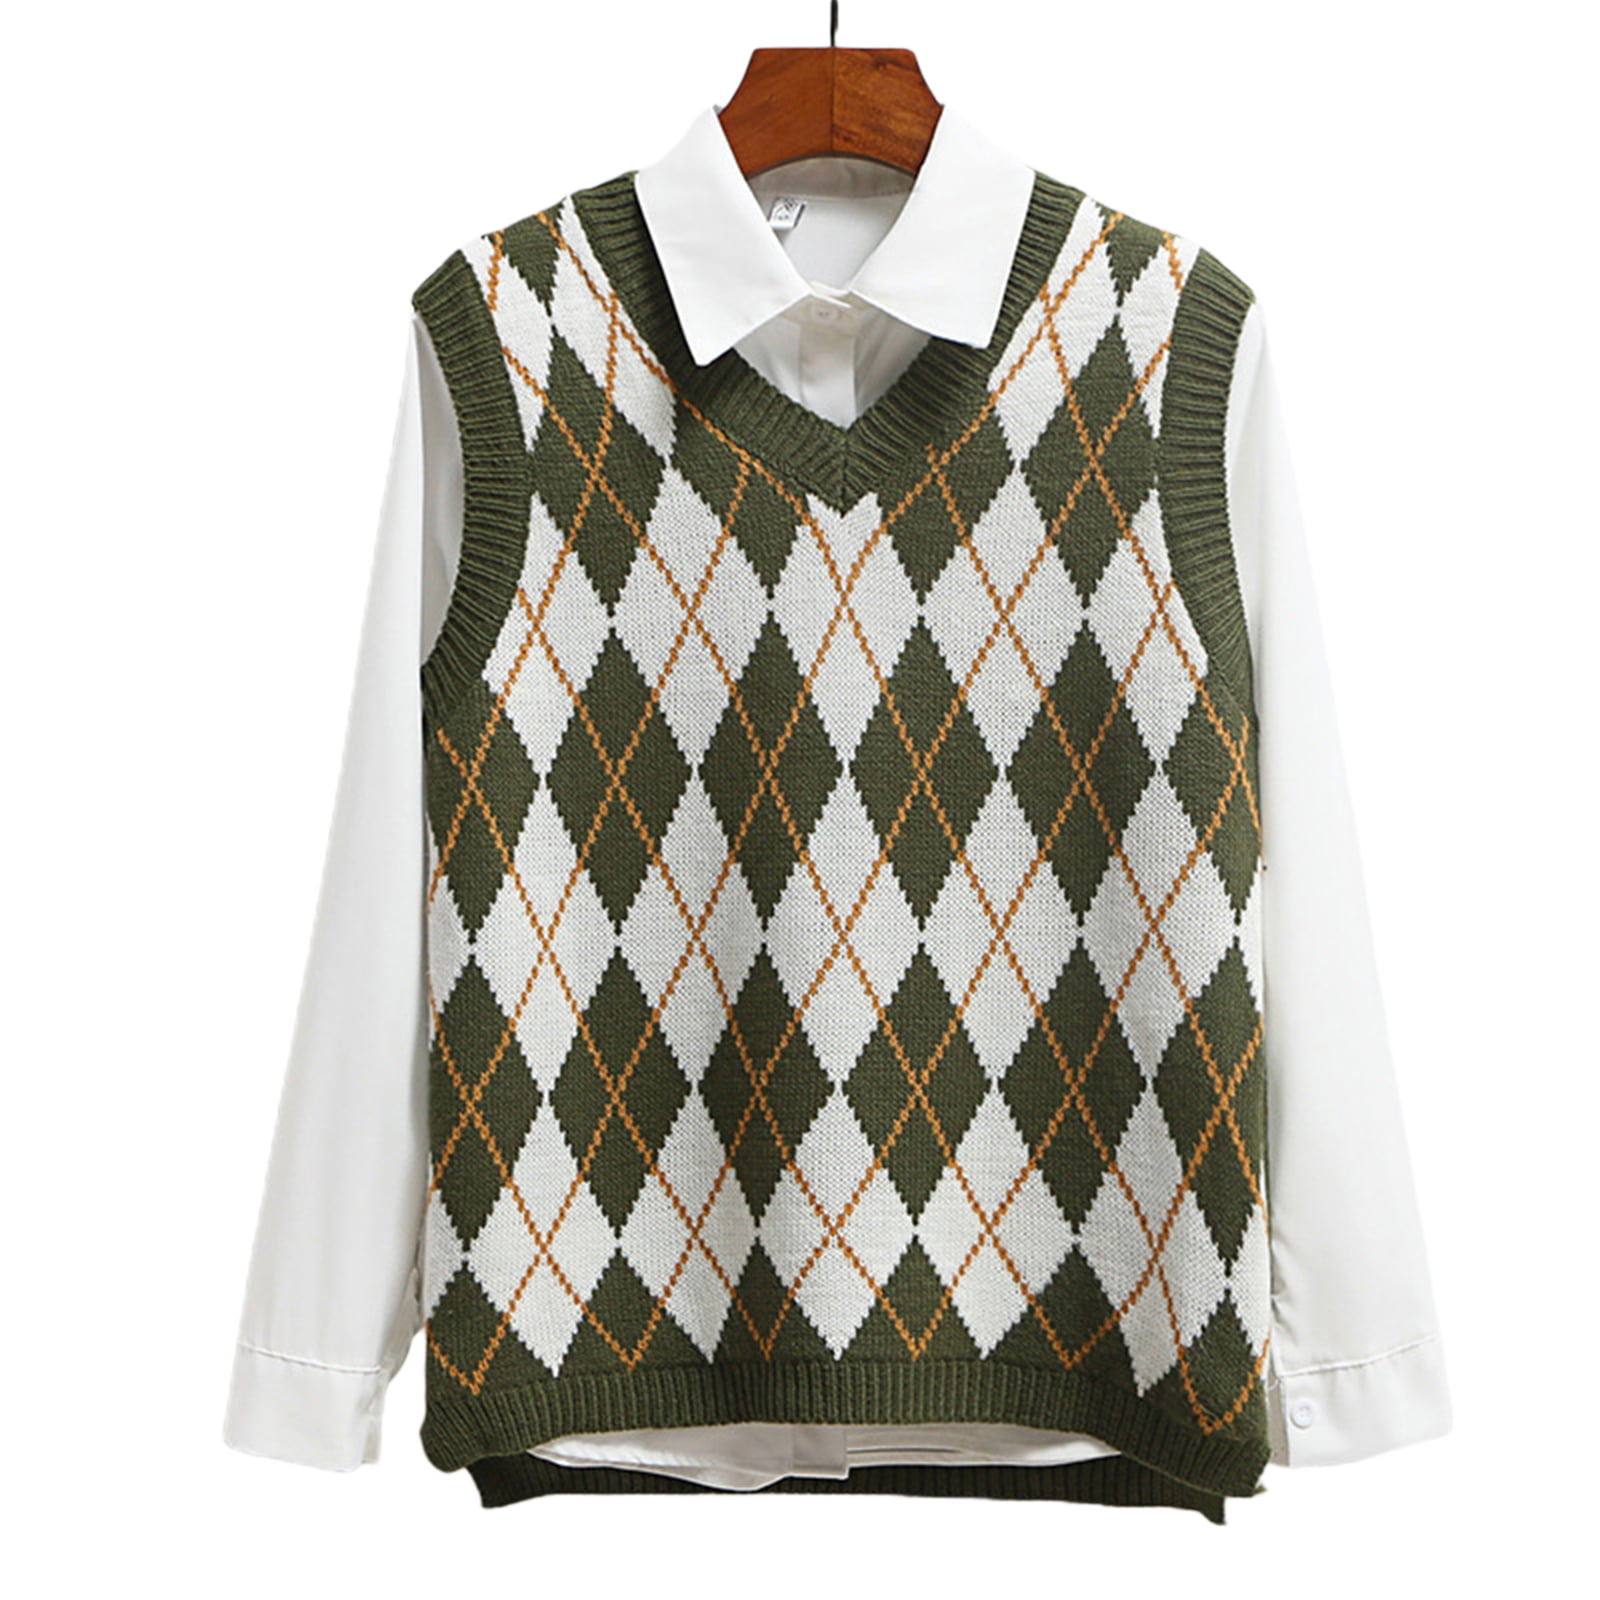 Fugift Women Multicolor Argyle Plaid Knitted Vest Ṡêxy V-Neck Slim Fit Sleeveless Sweater Preppy Style Vintage Pullover Jümper Crop Tank Top 